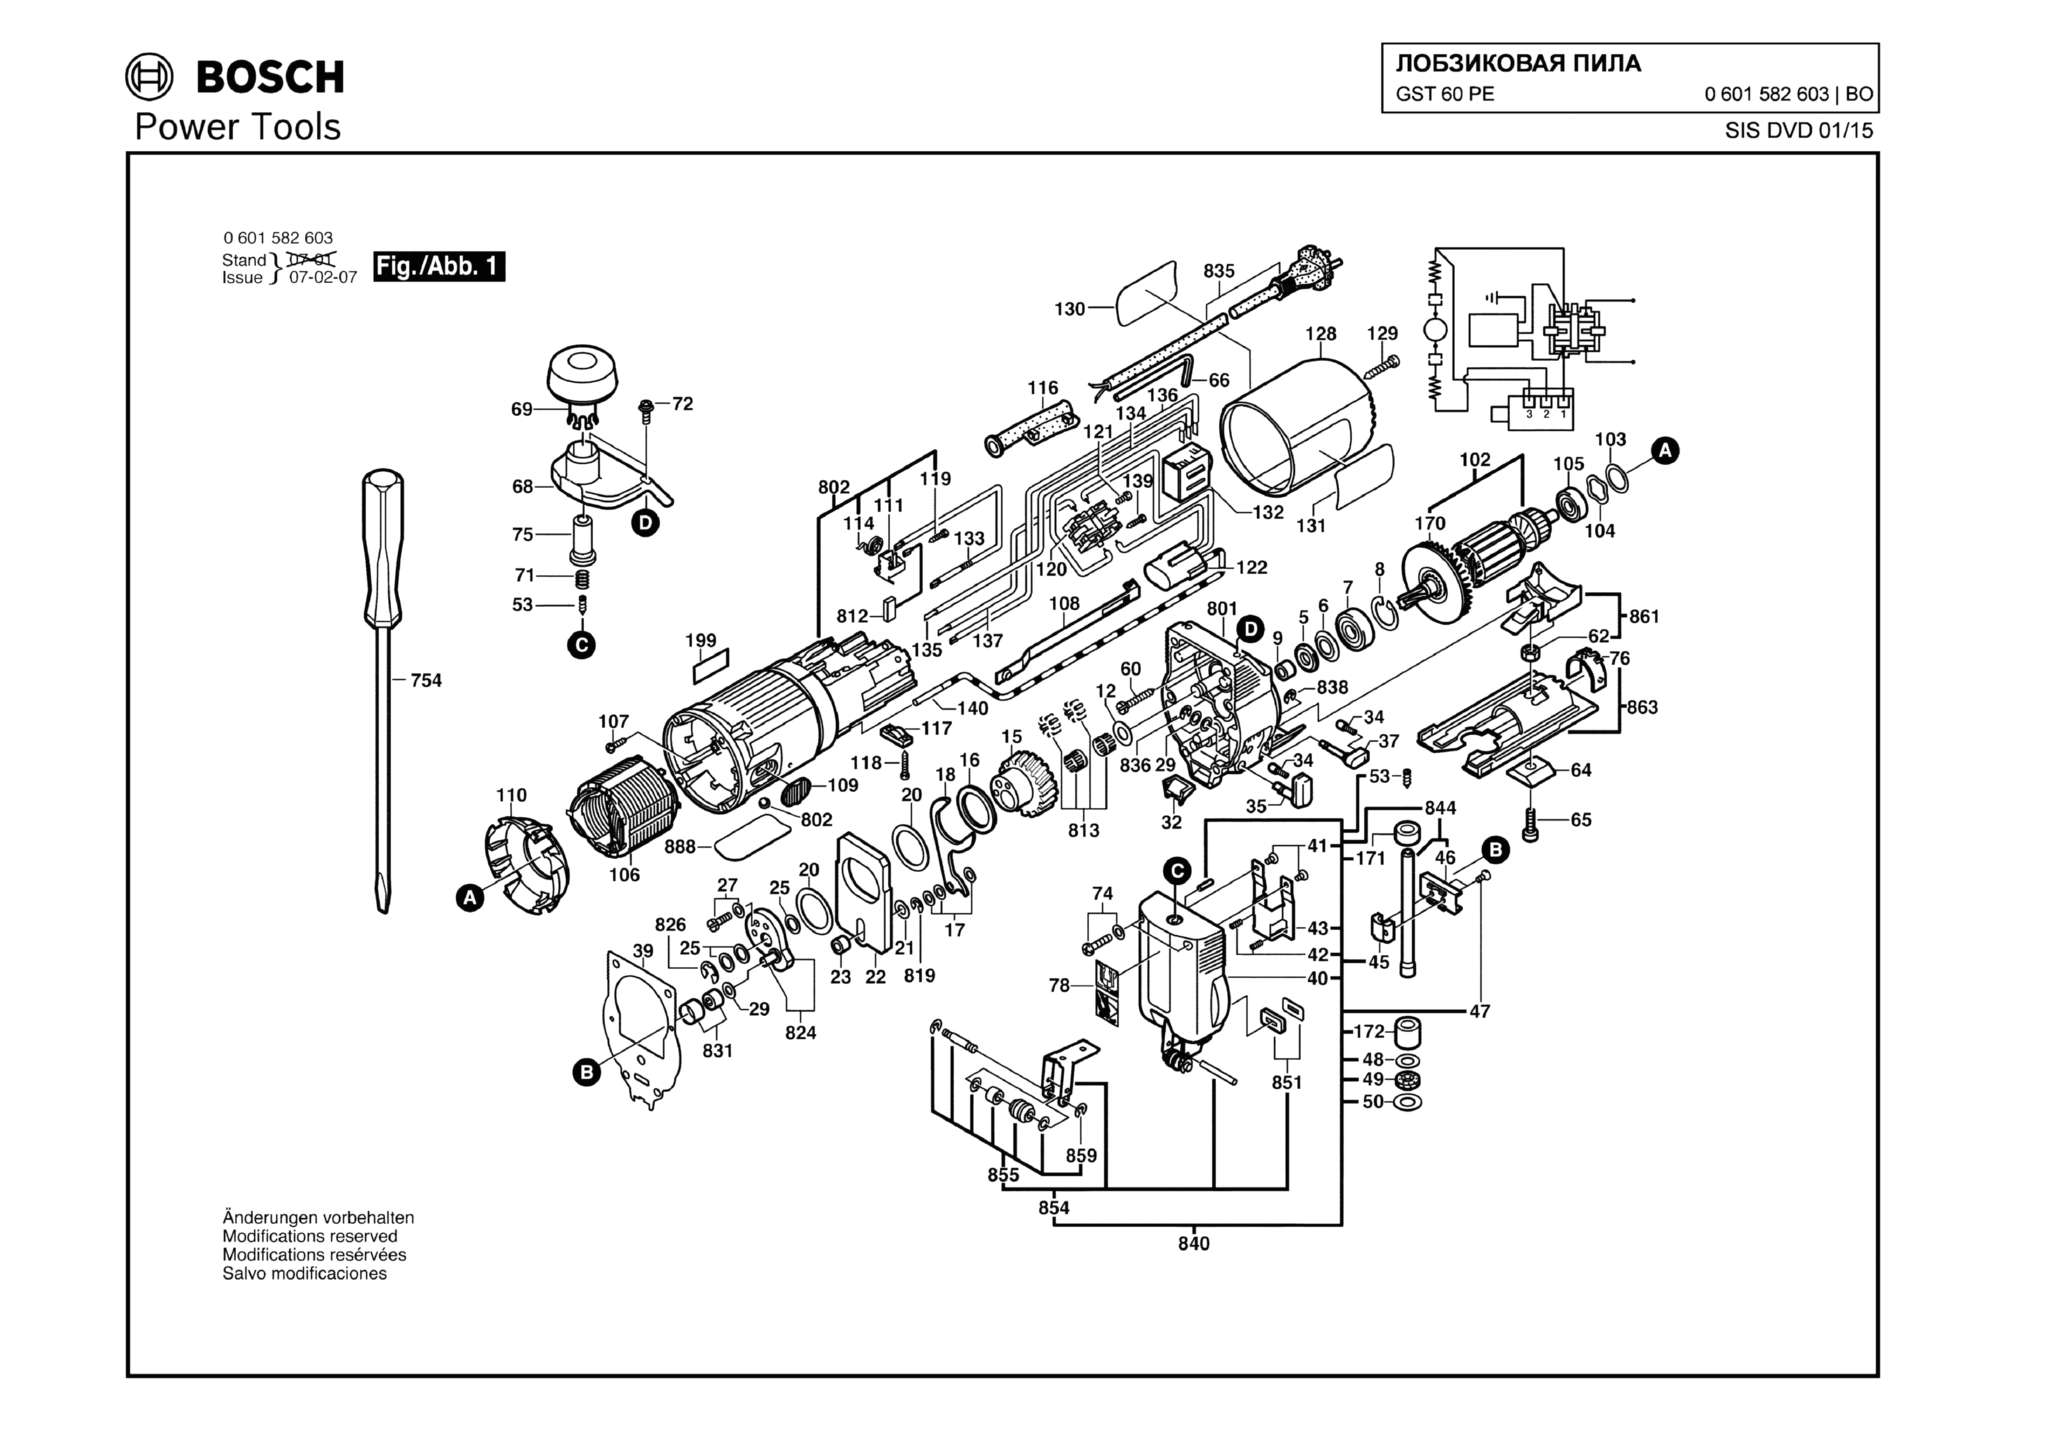 Запчасти, схема и деталировка Bosch GST 60 PE (ТИП 0601582603)